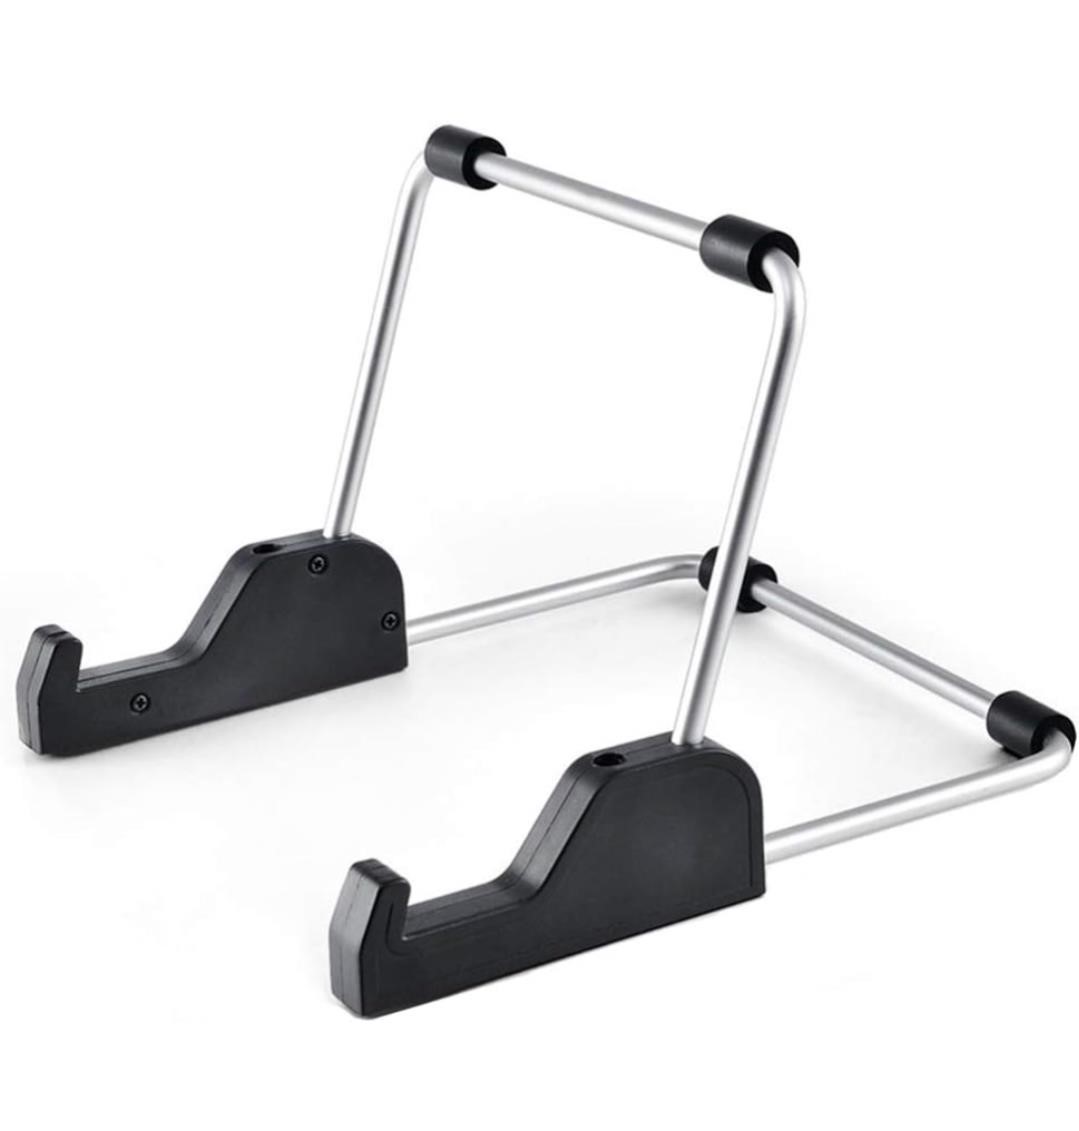 Mlife Mini Light Pad Stand - Adjustable Light Box